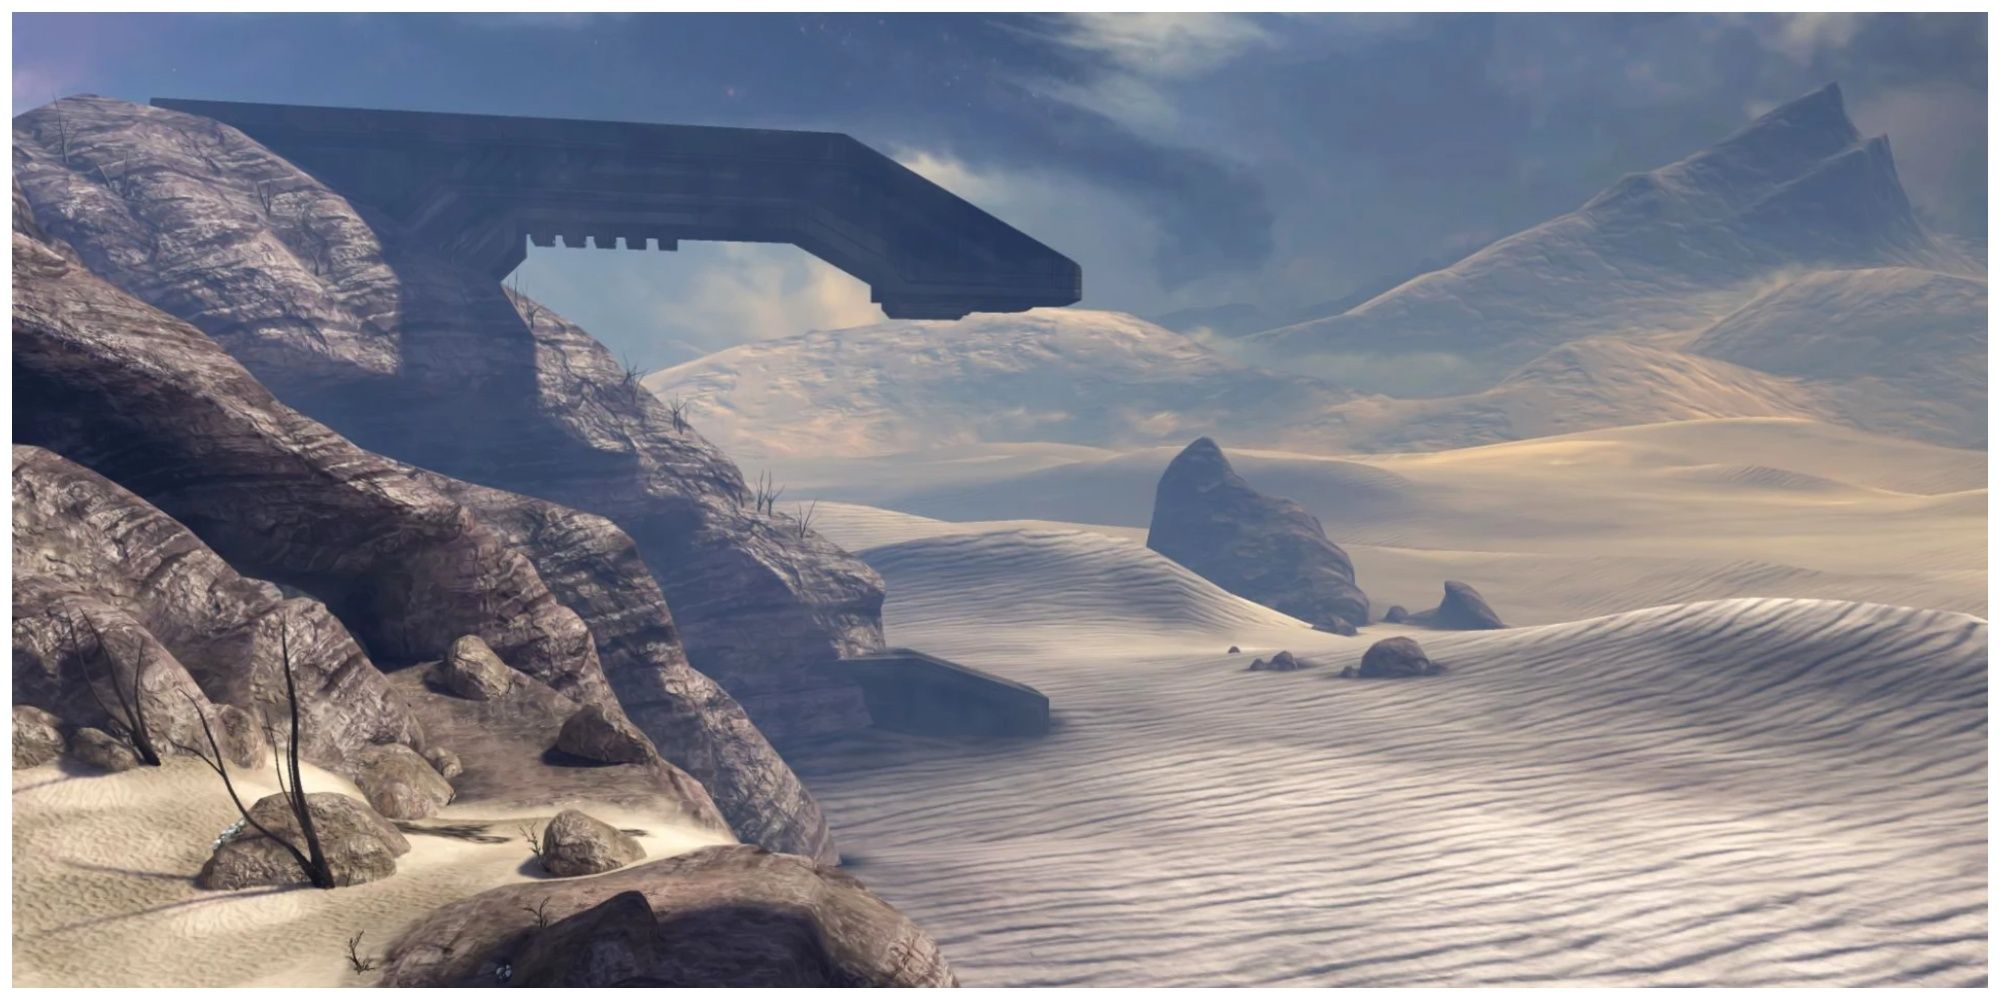 Halo 3 The Ark